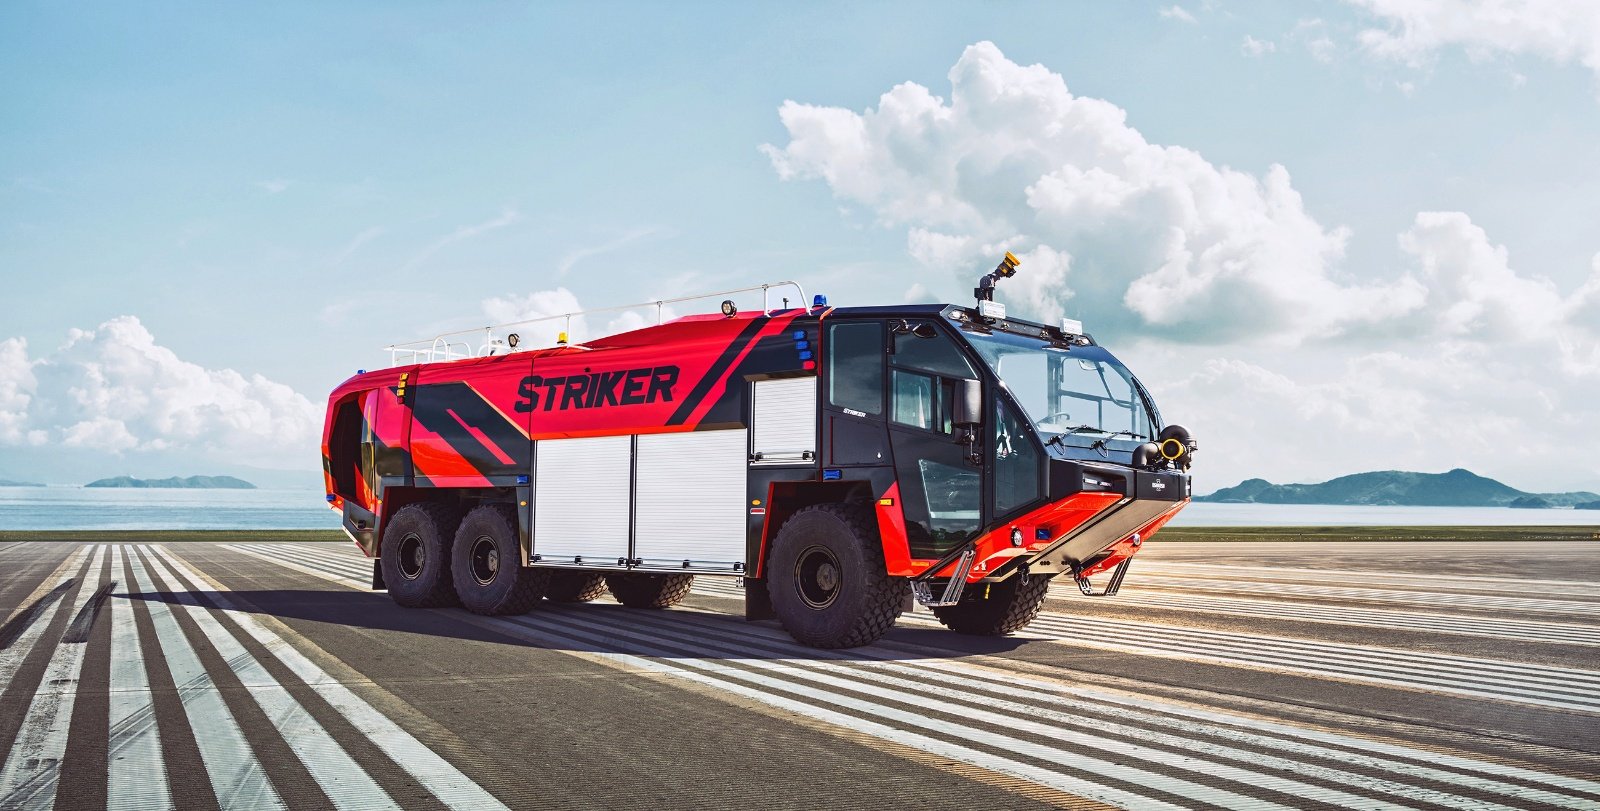 Red Striker ARFF truck on a runway